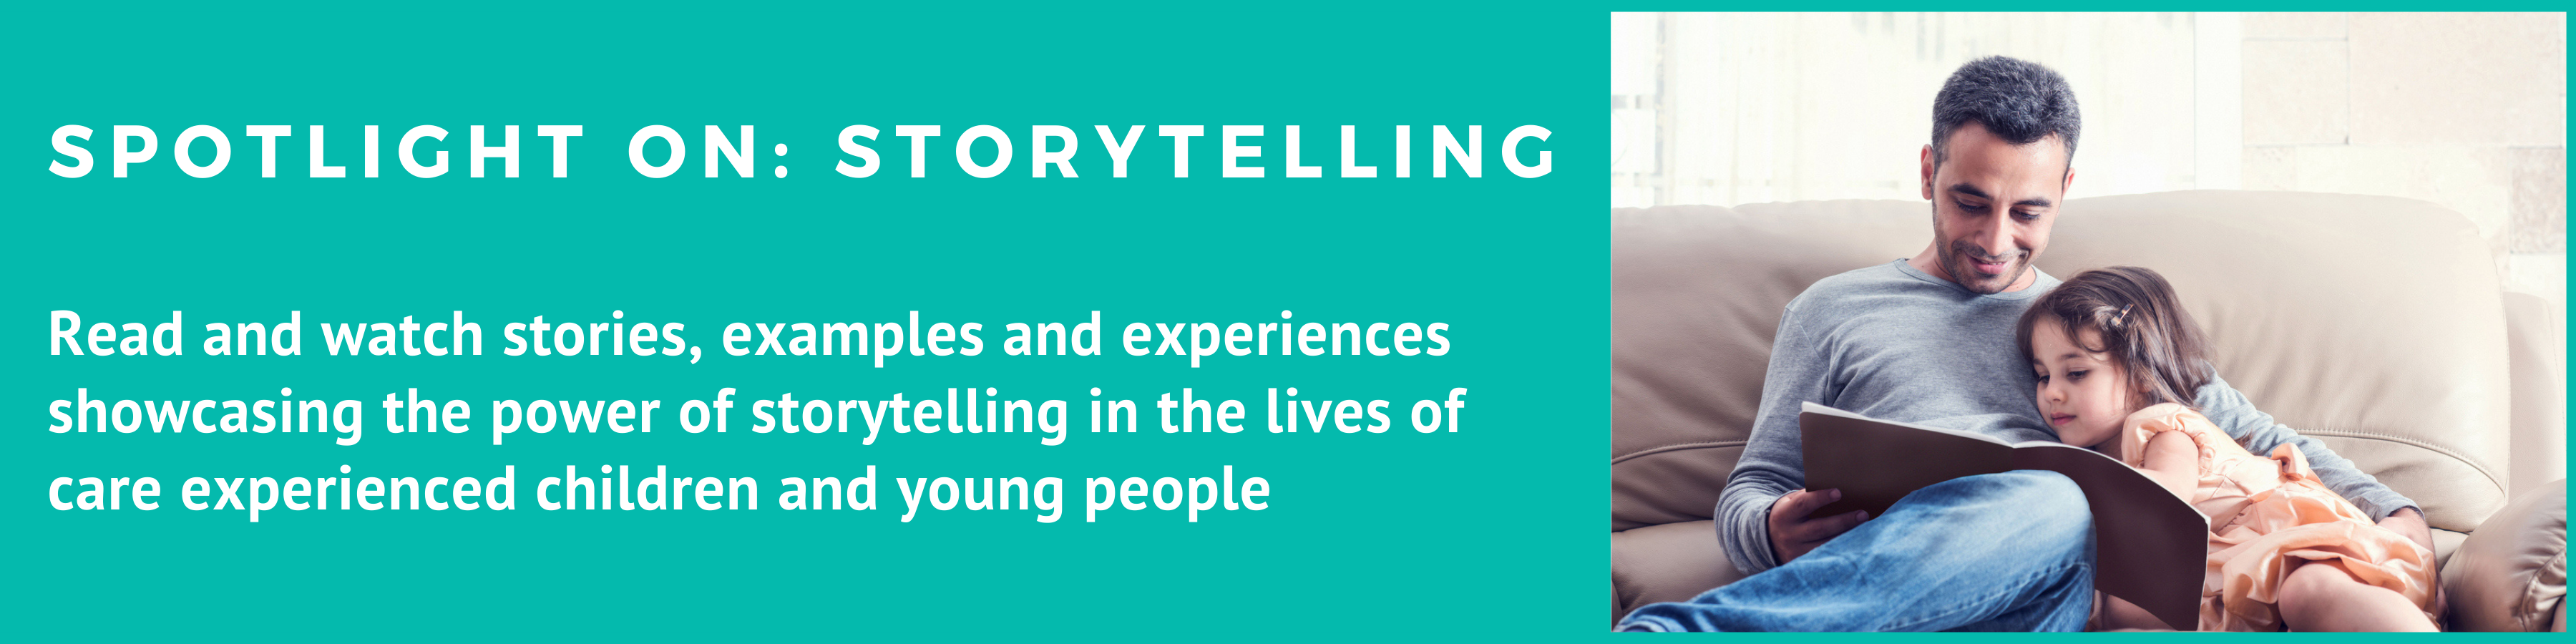 Spotlight on storytelling (3).png